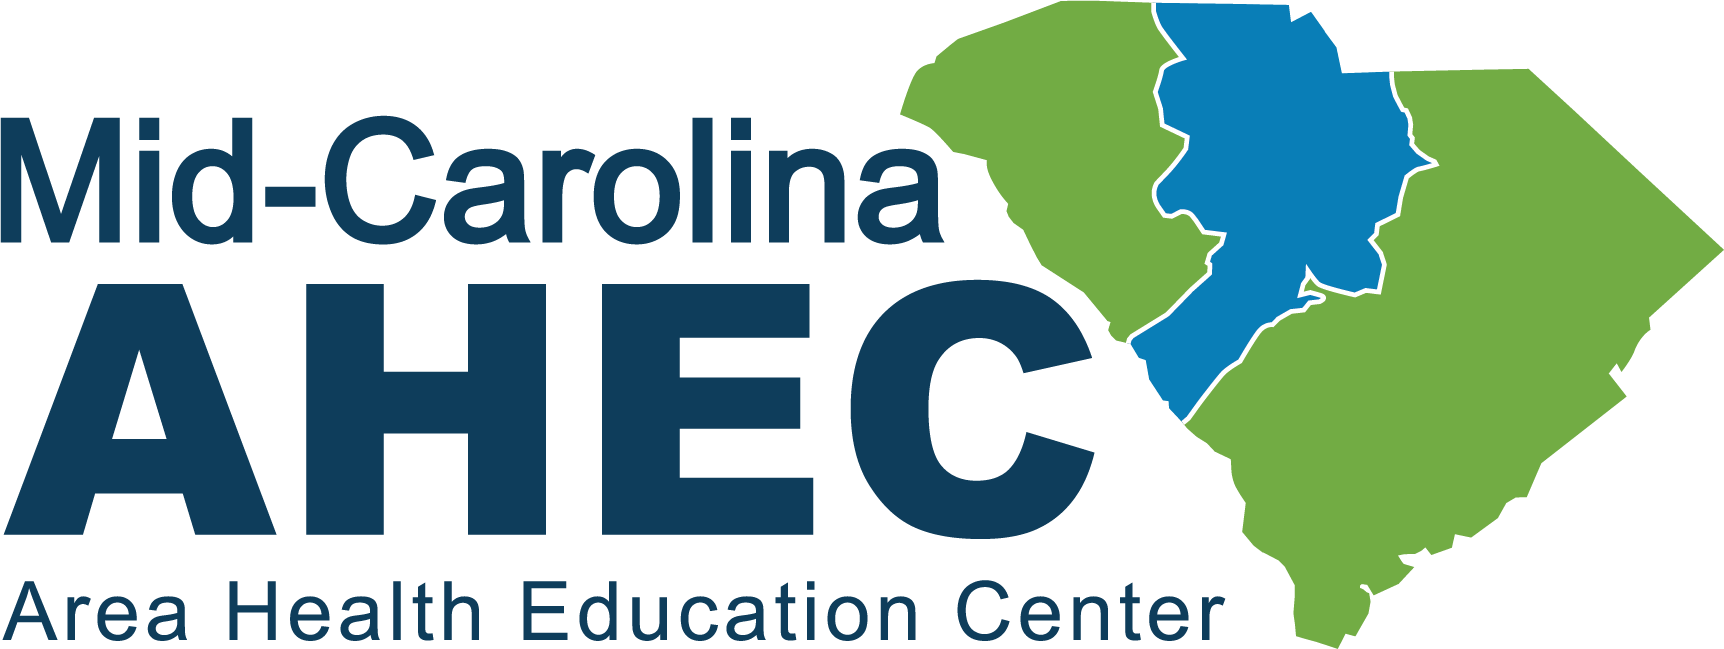 Mid-Carolina AHEC